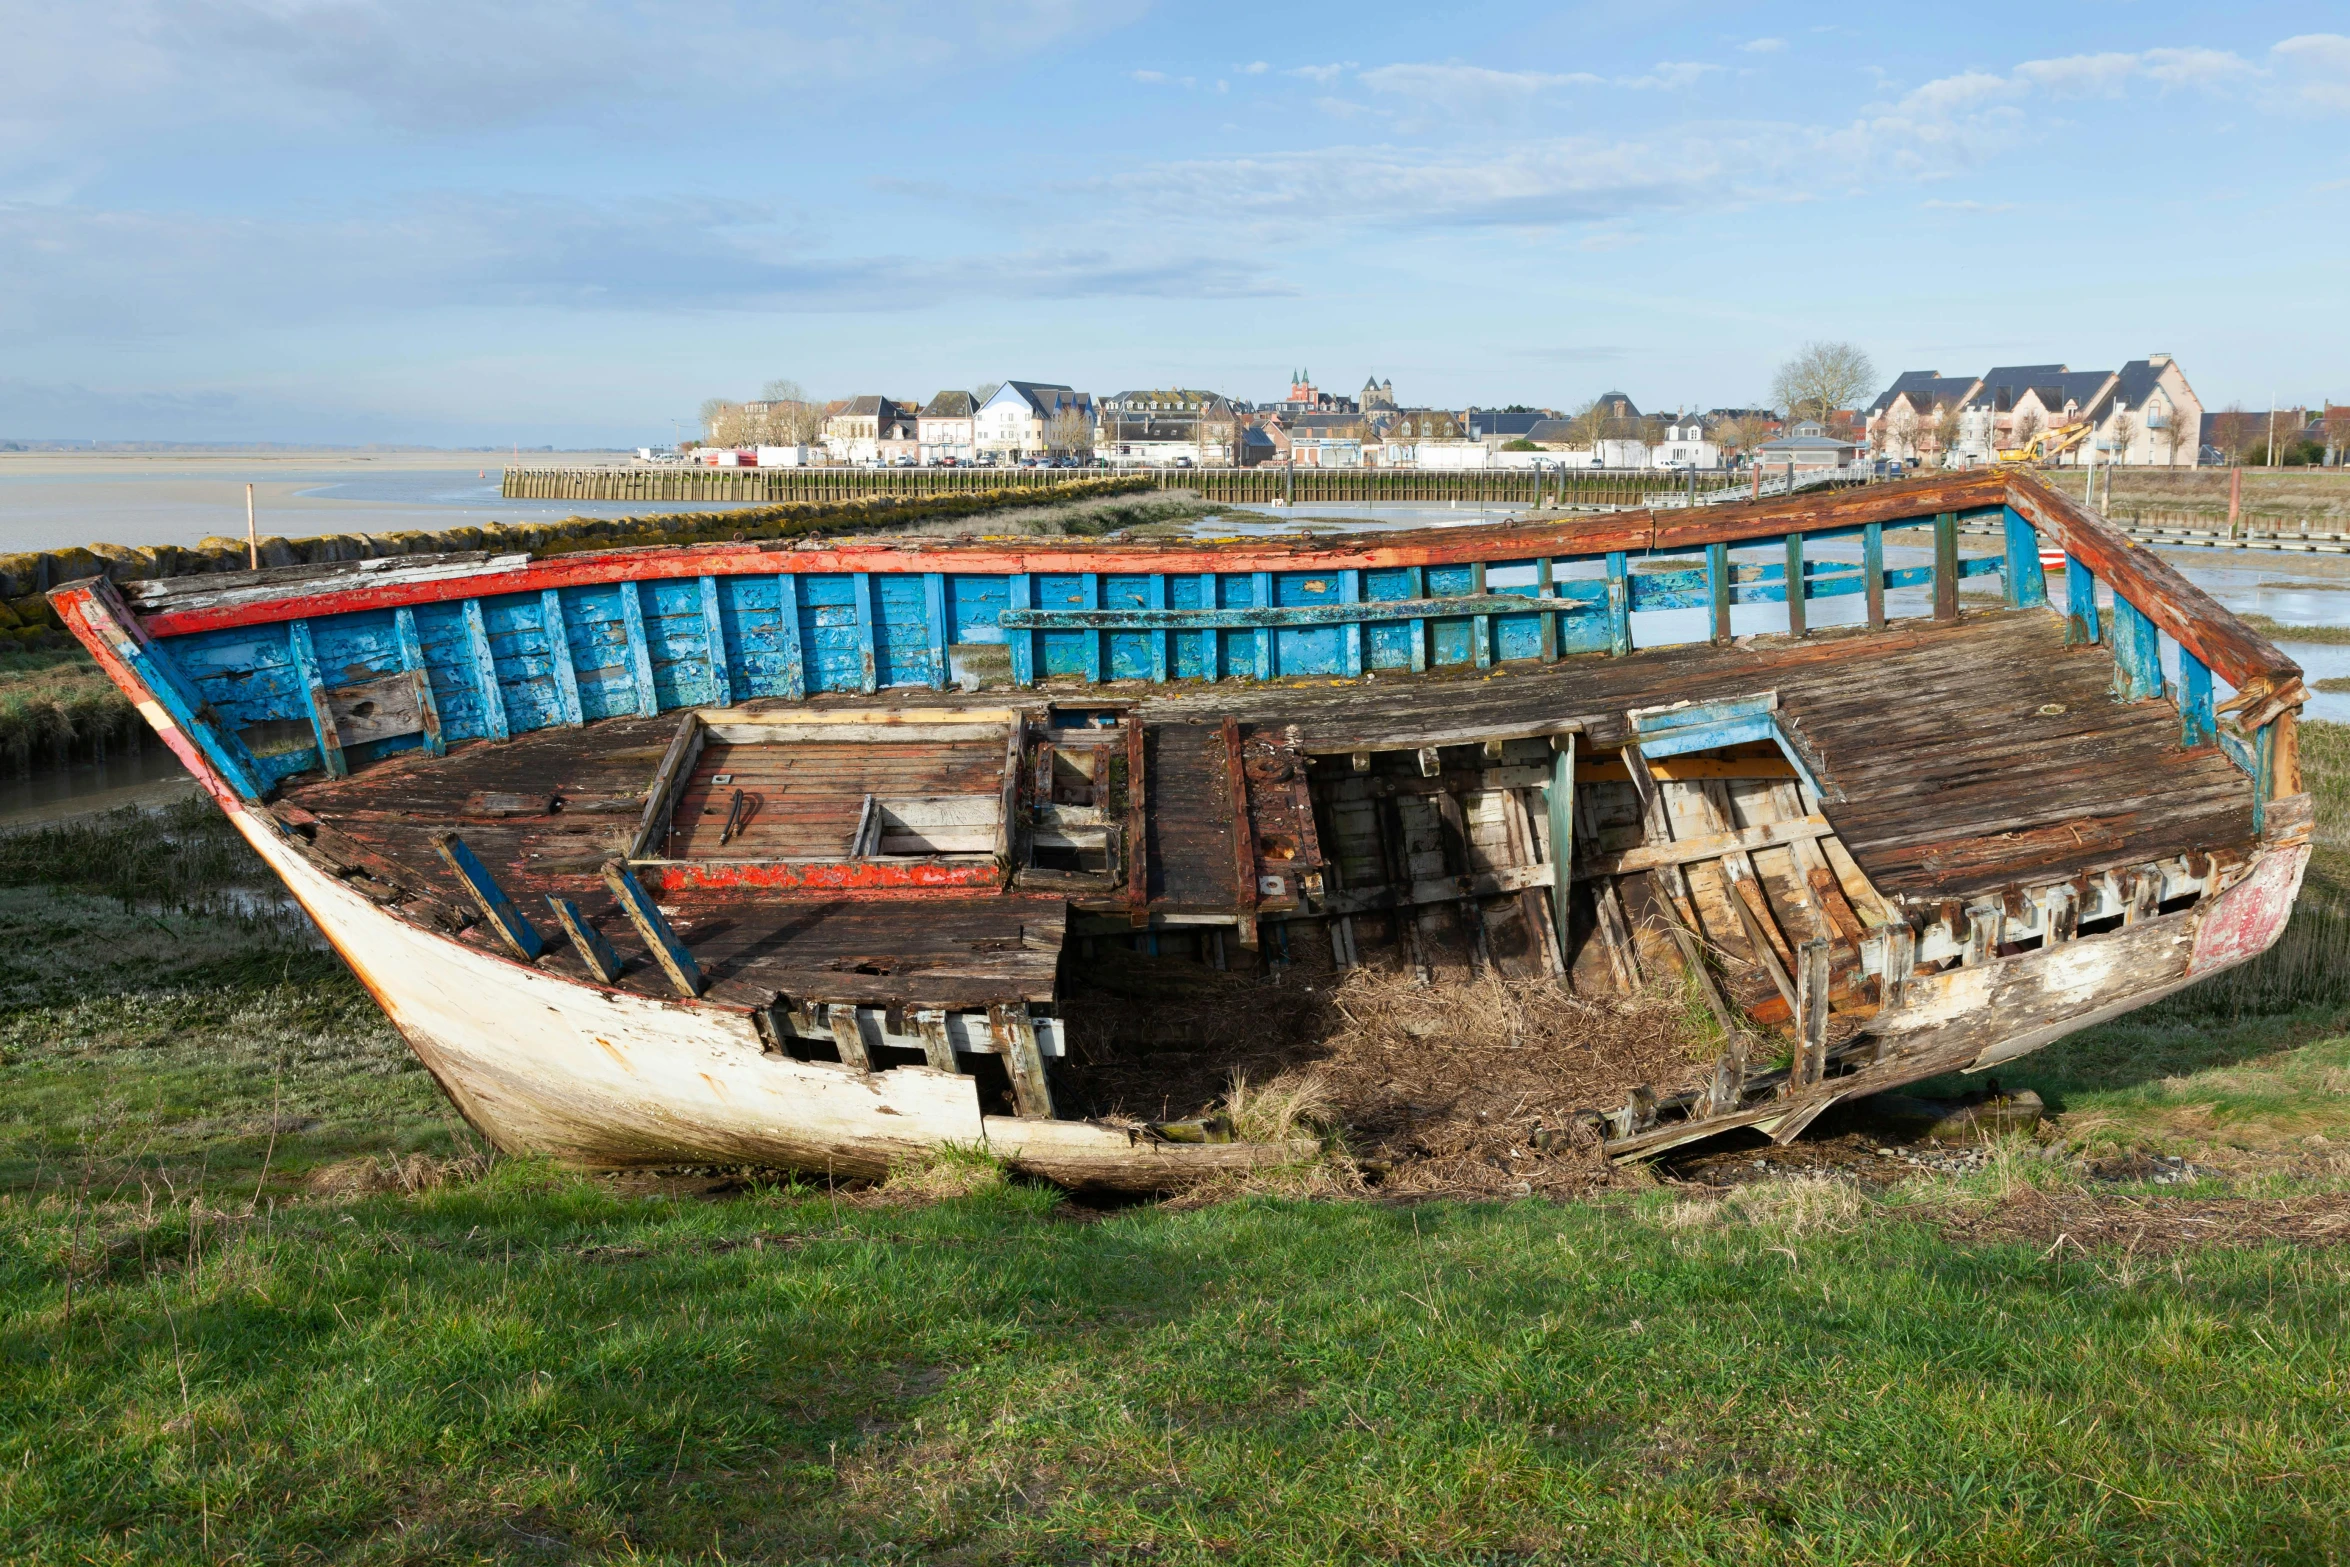 a boat that has fallen apart near the grass